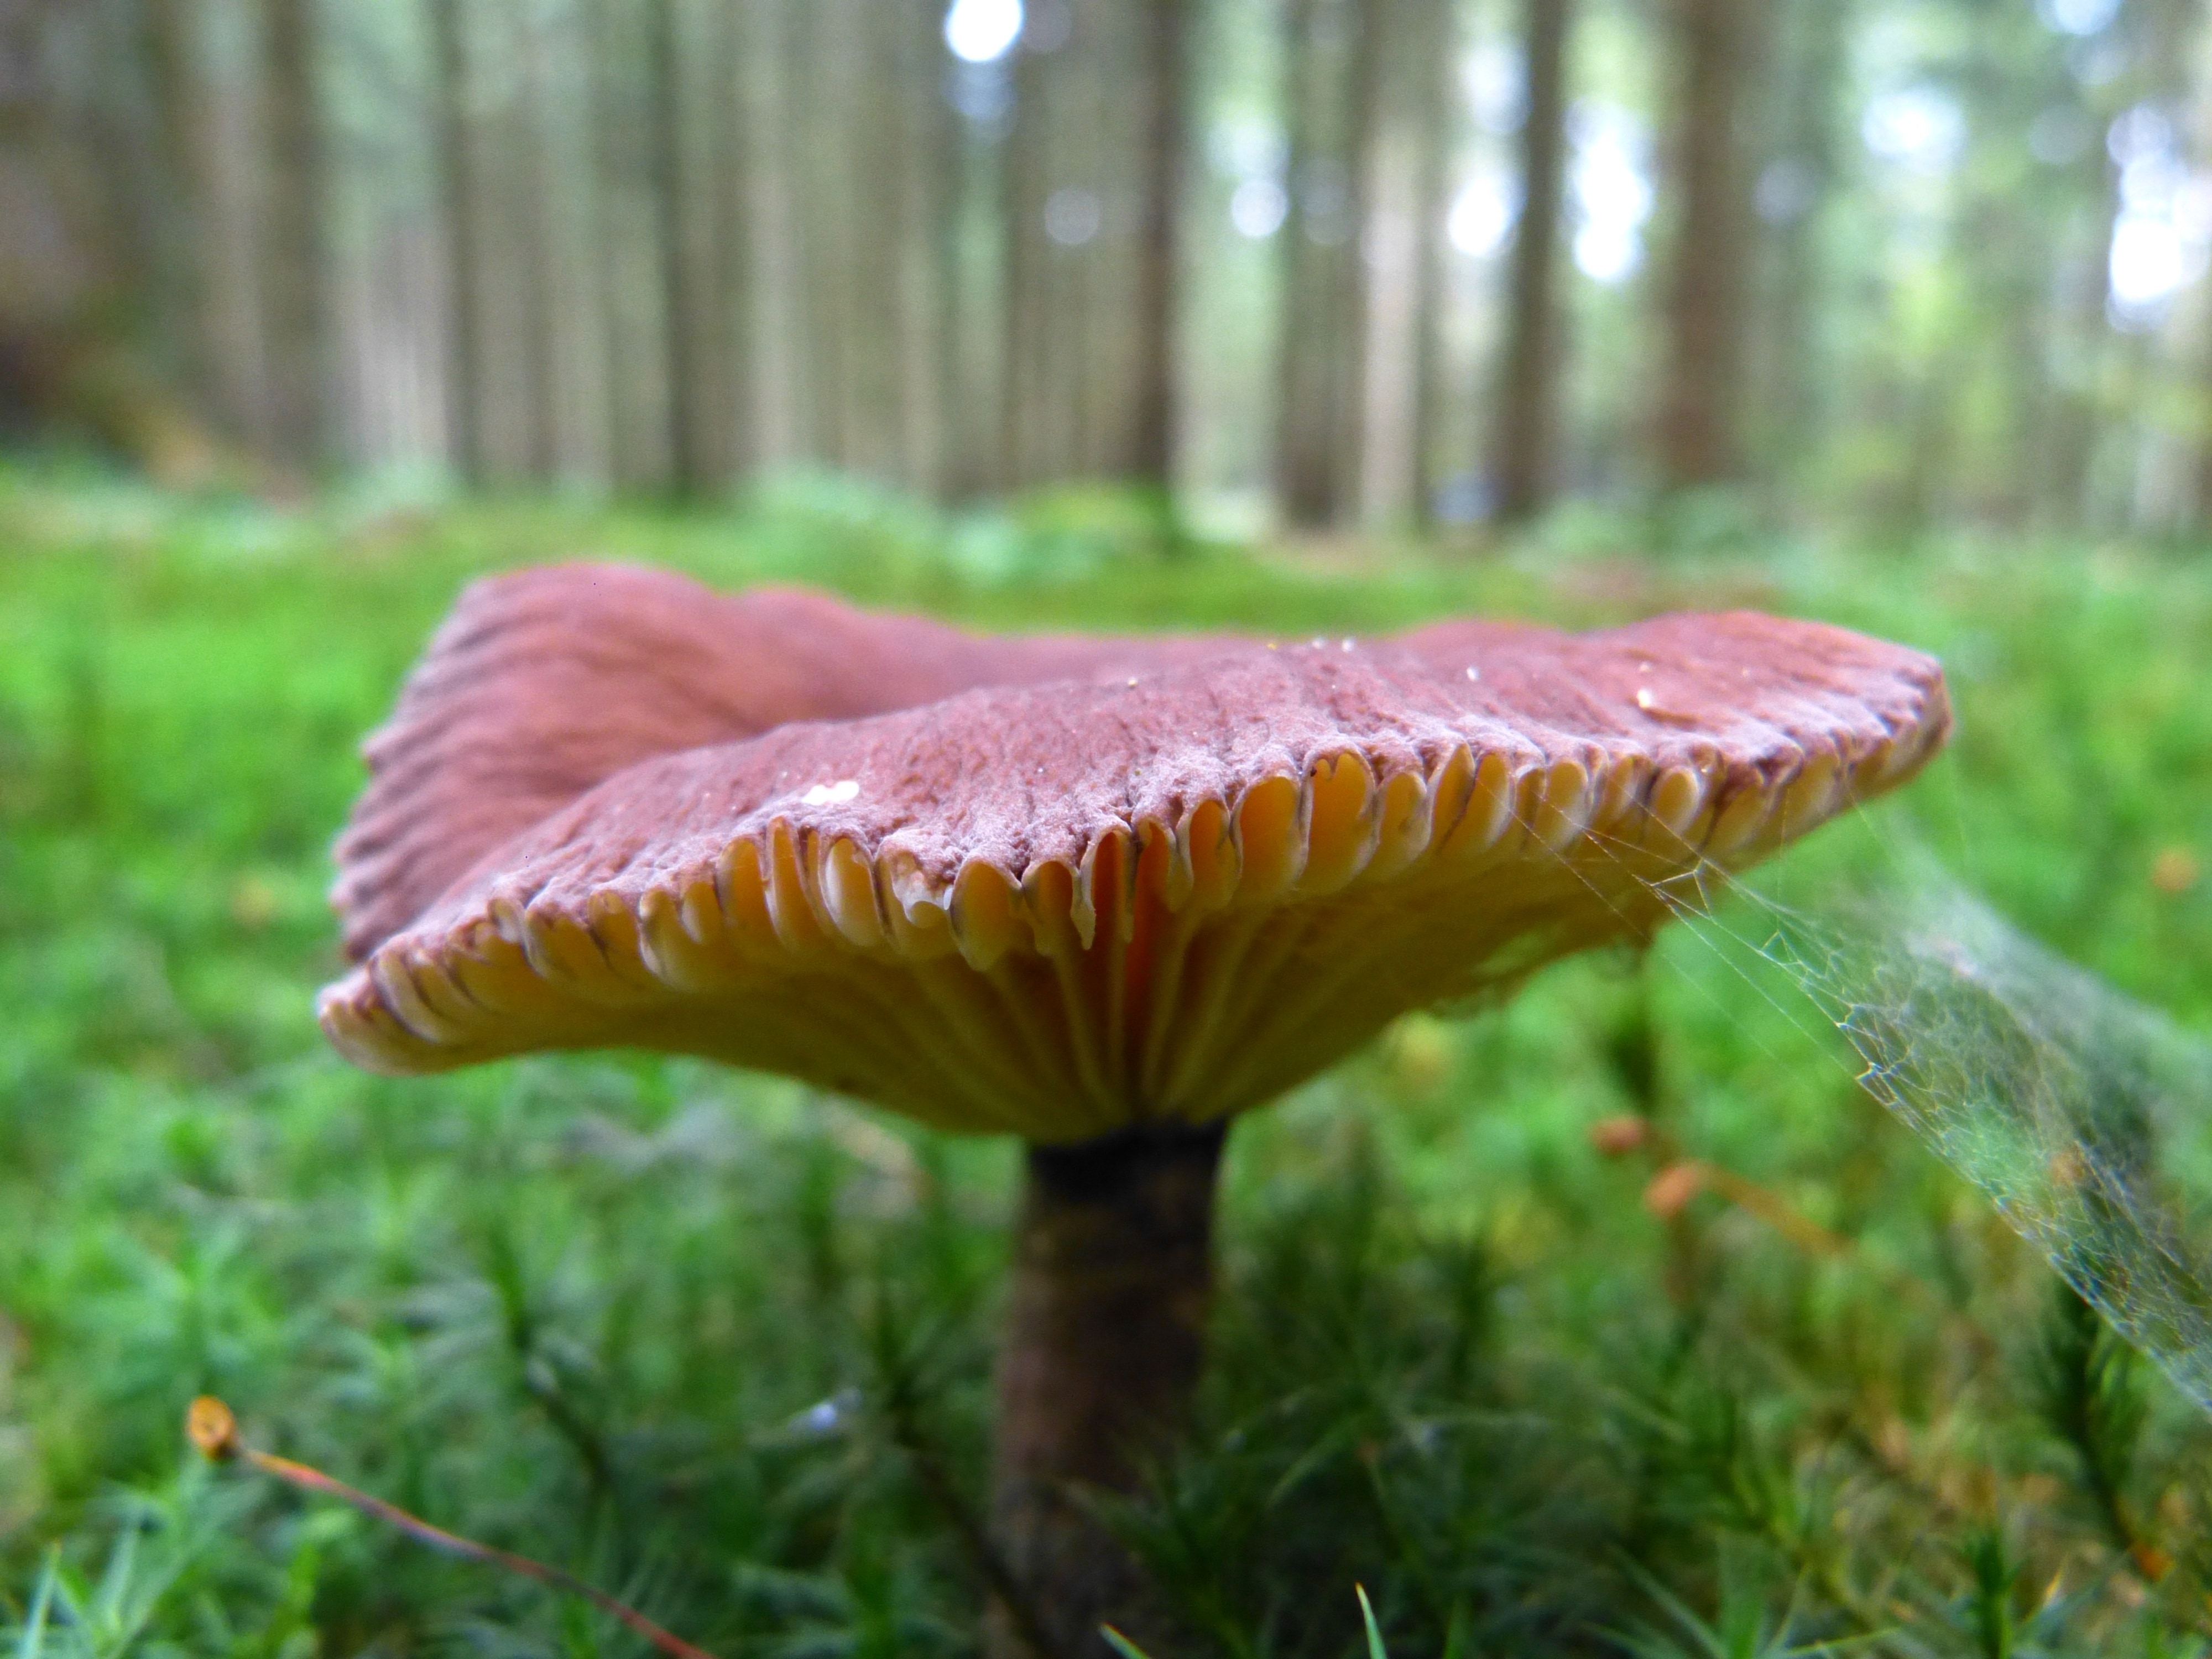 red and beige mushroom